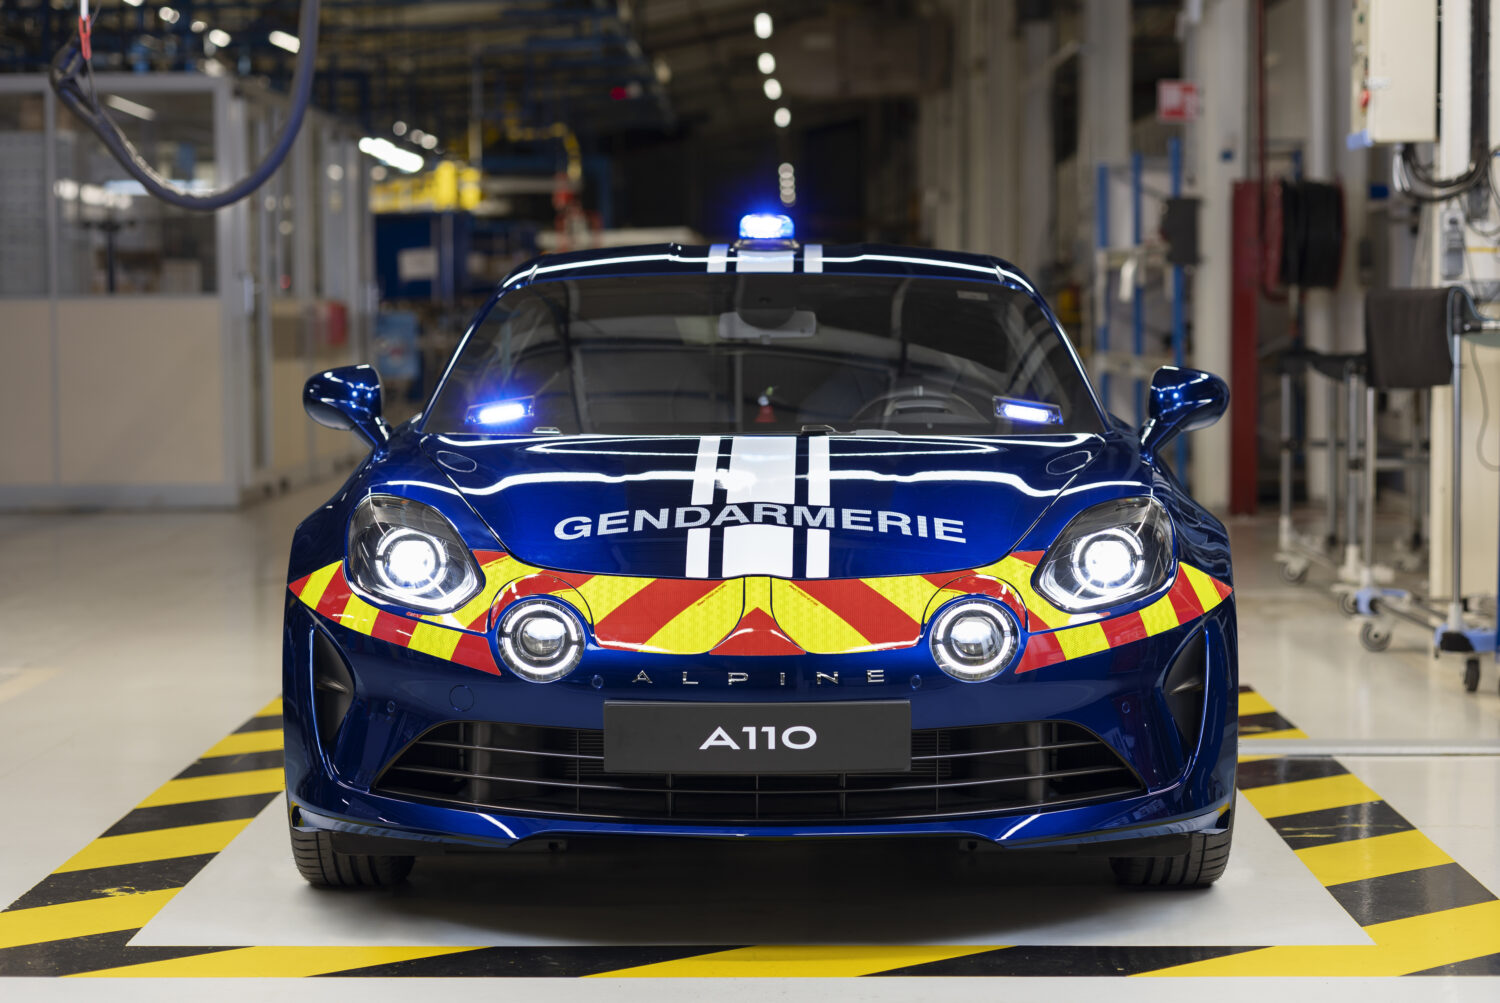 2021 - Alpine A110 Gendarmerie (3).jpg